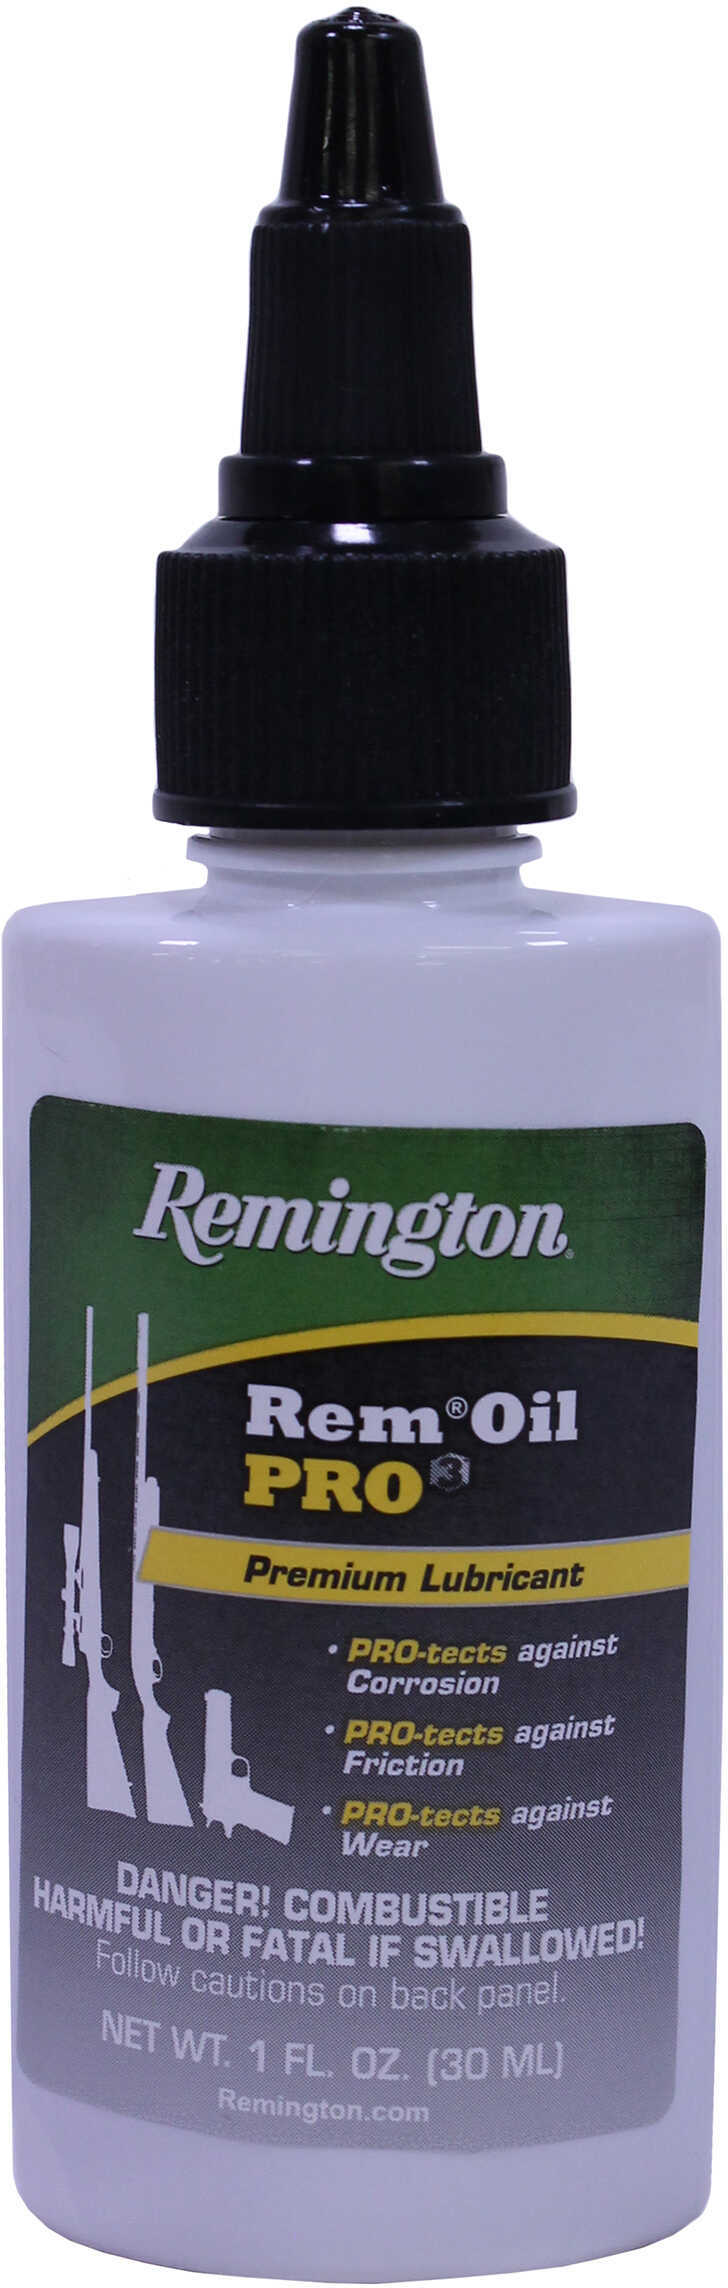 Rem Oil Pro3 1Oz Bottle